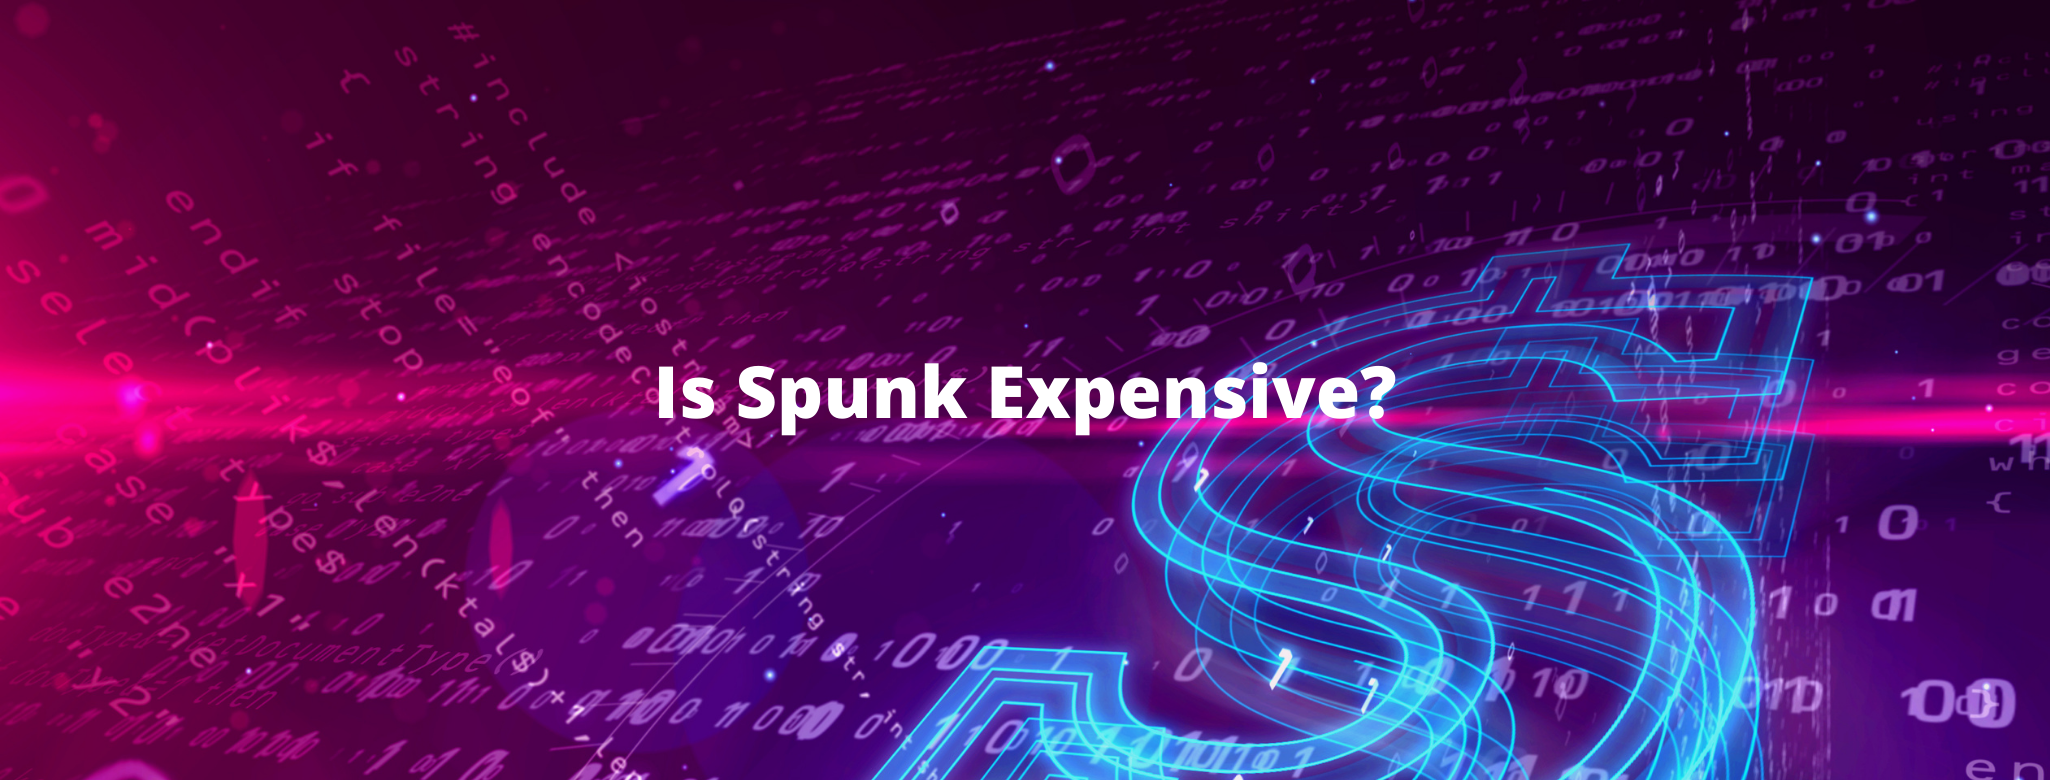 Is Splunk Expensive?